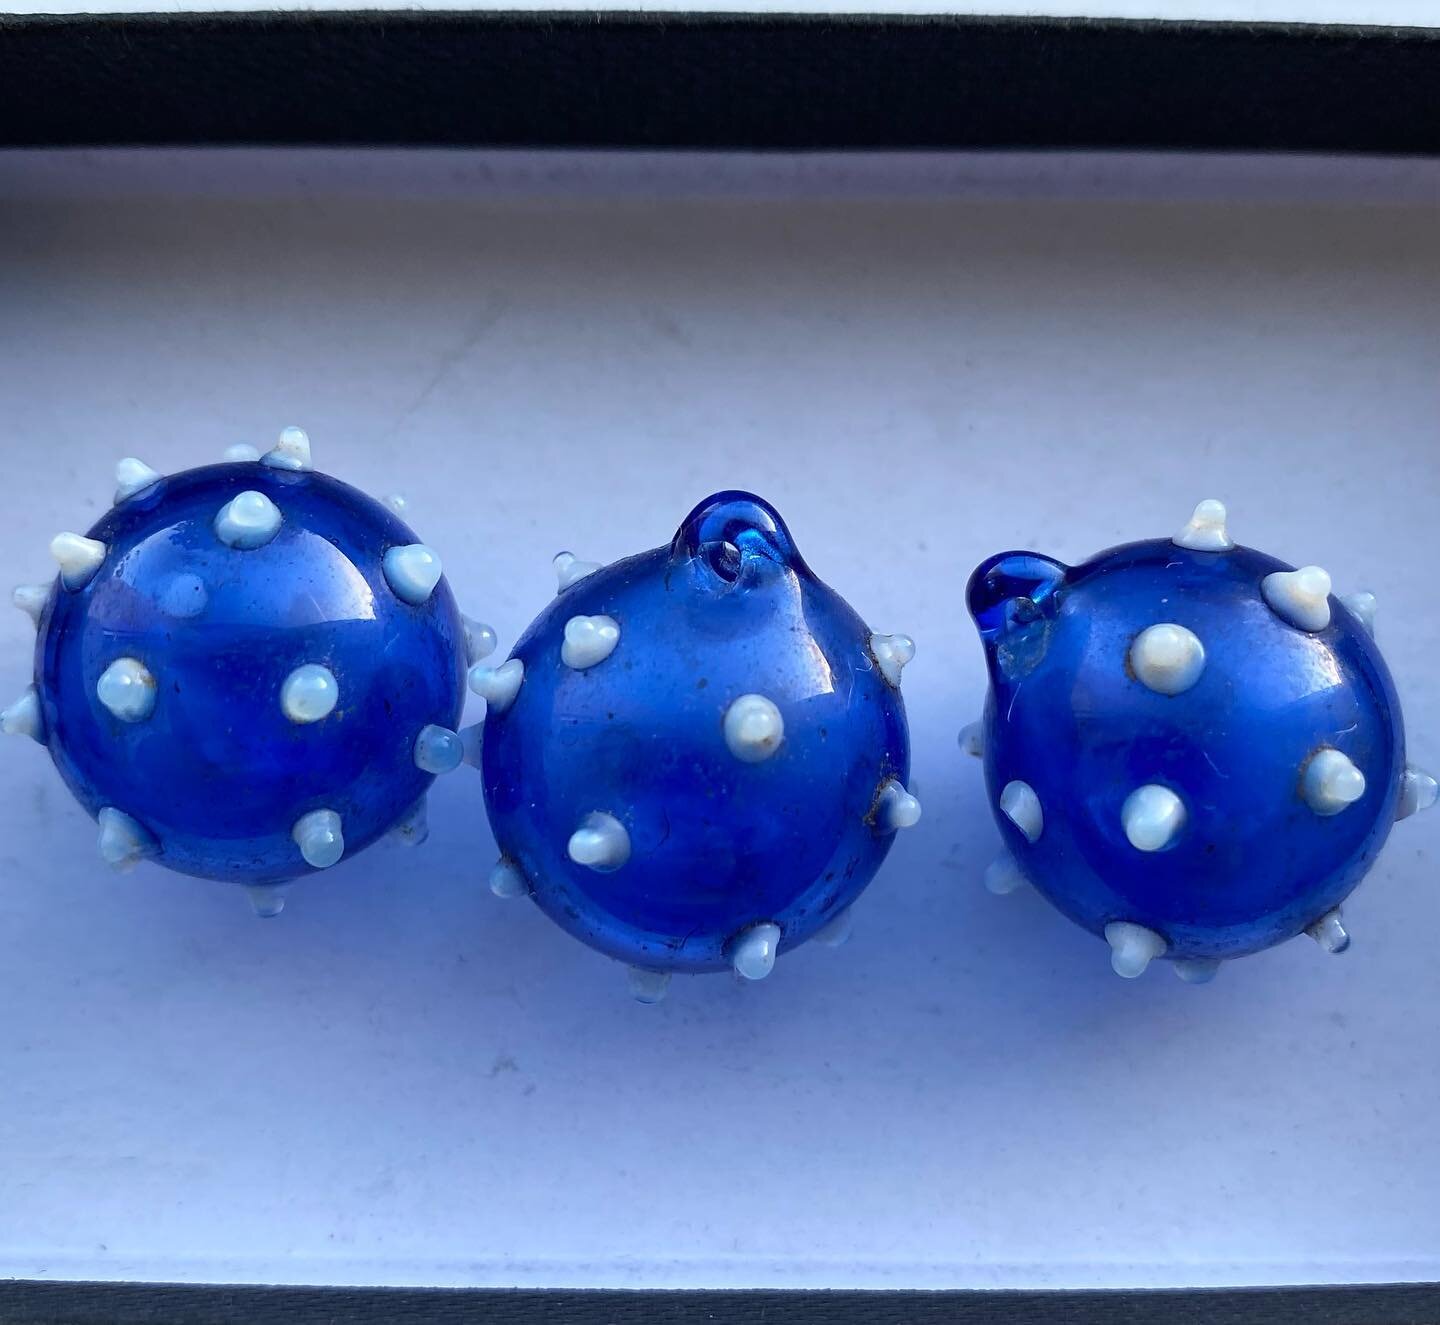 Fritz Lamplight blue glass buttons just added to website #www.vintagebuttonemporium.com #fritzlampl #orplidglass #vintagebuttons #glassbuttons